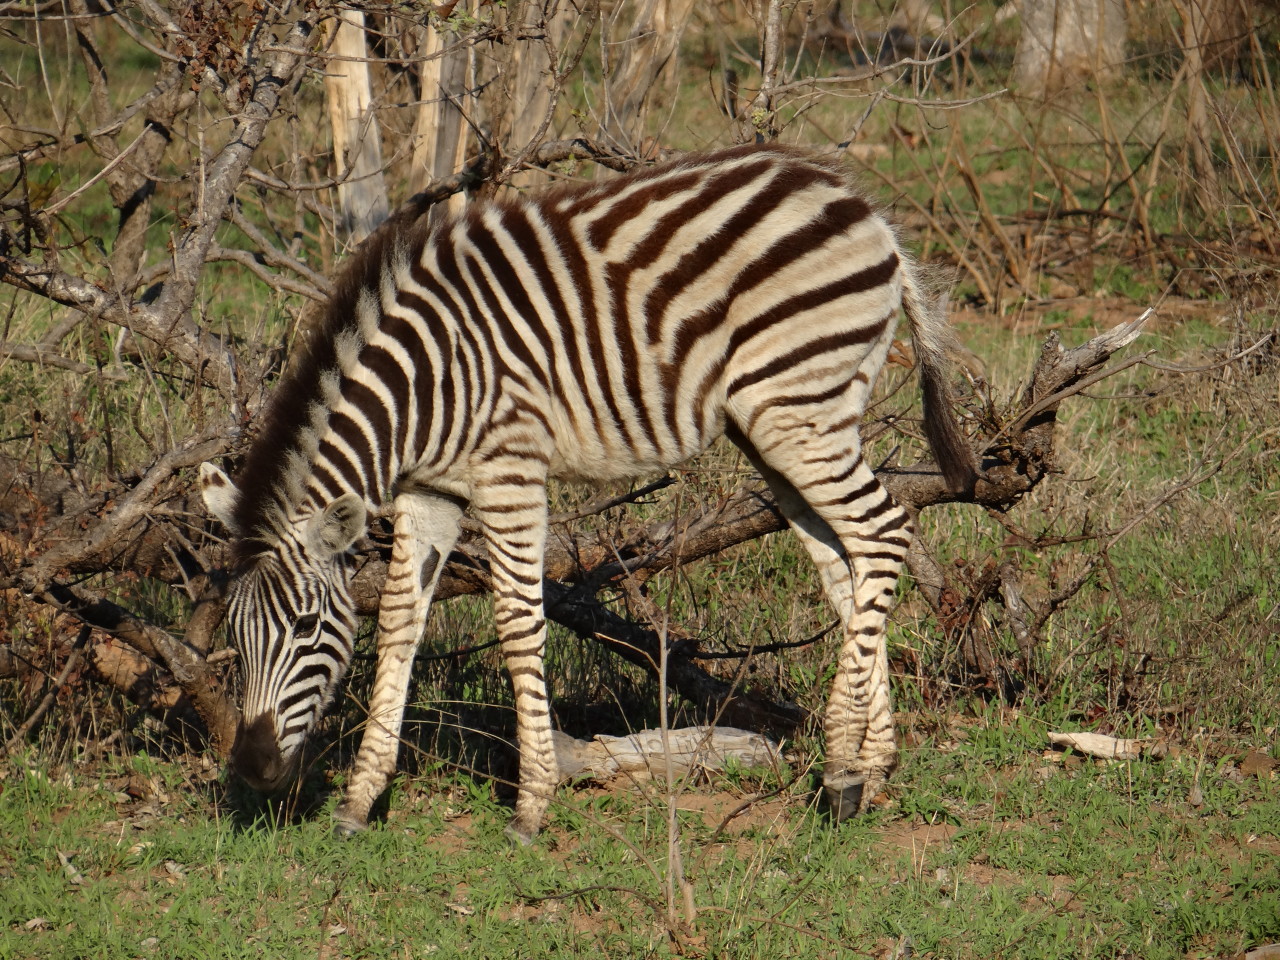 Zebra on safari in south africa sabi sands game reserve